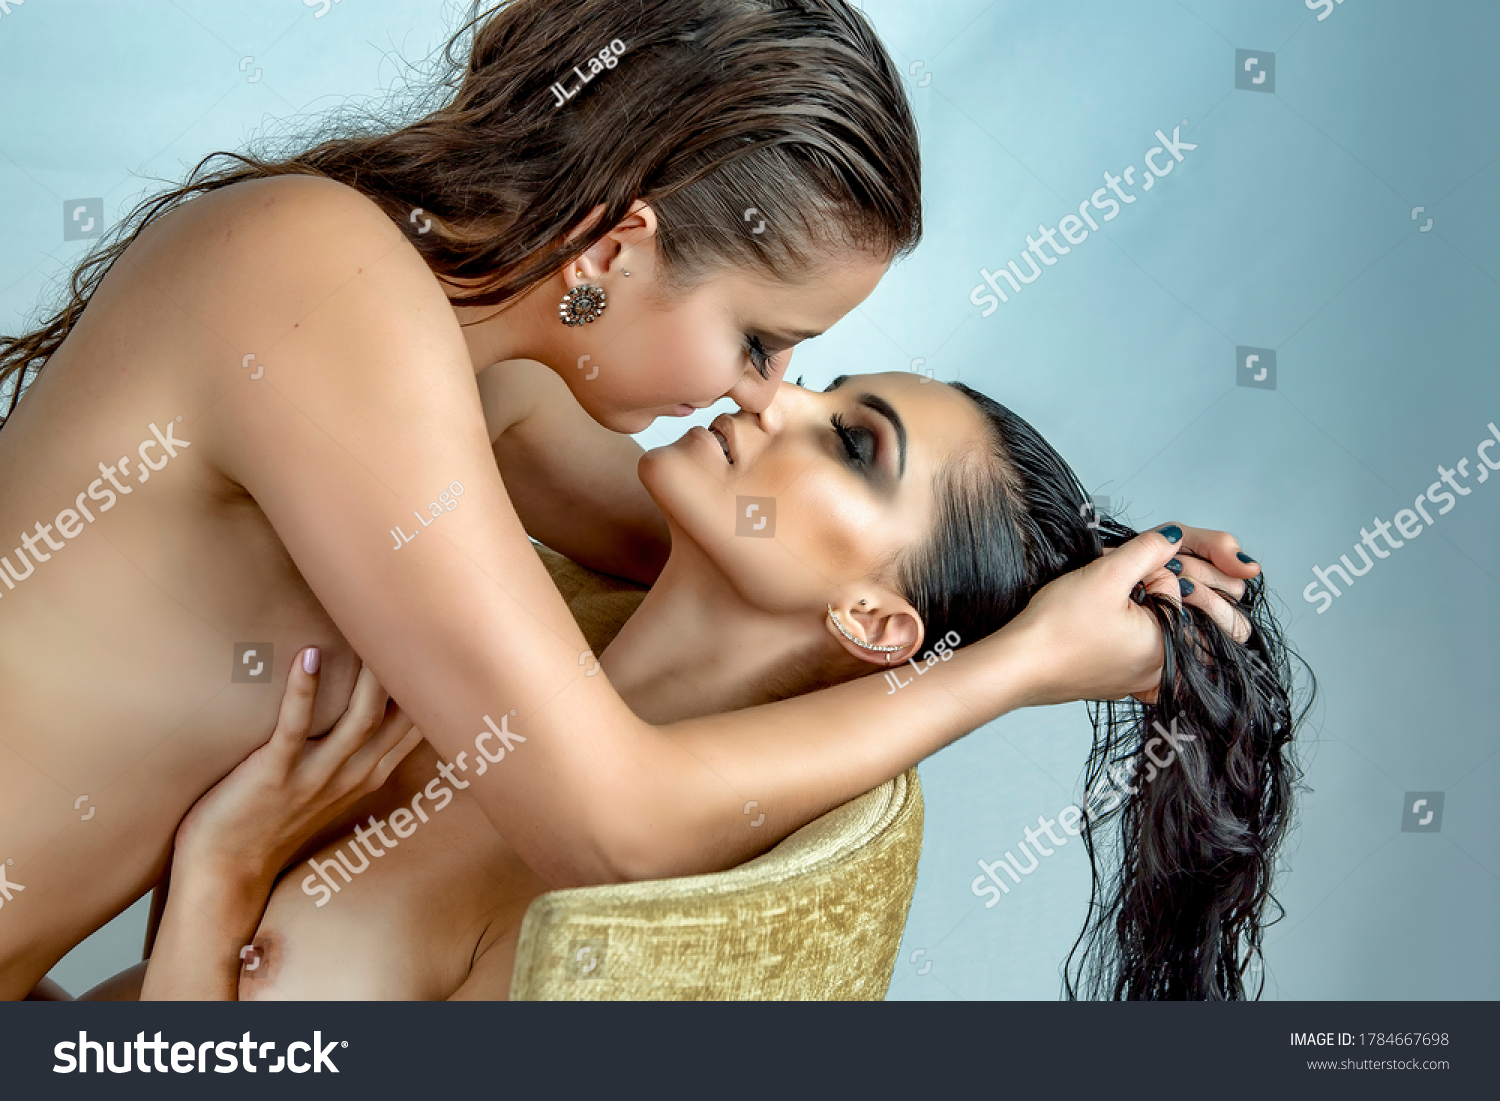 Nude lesbian couple